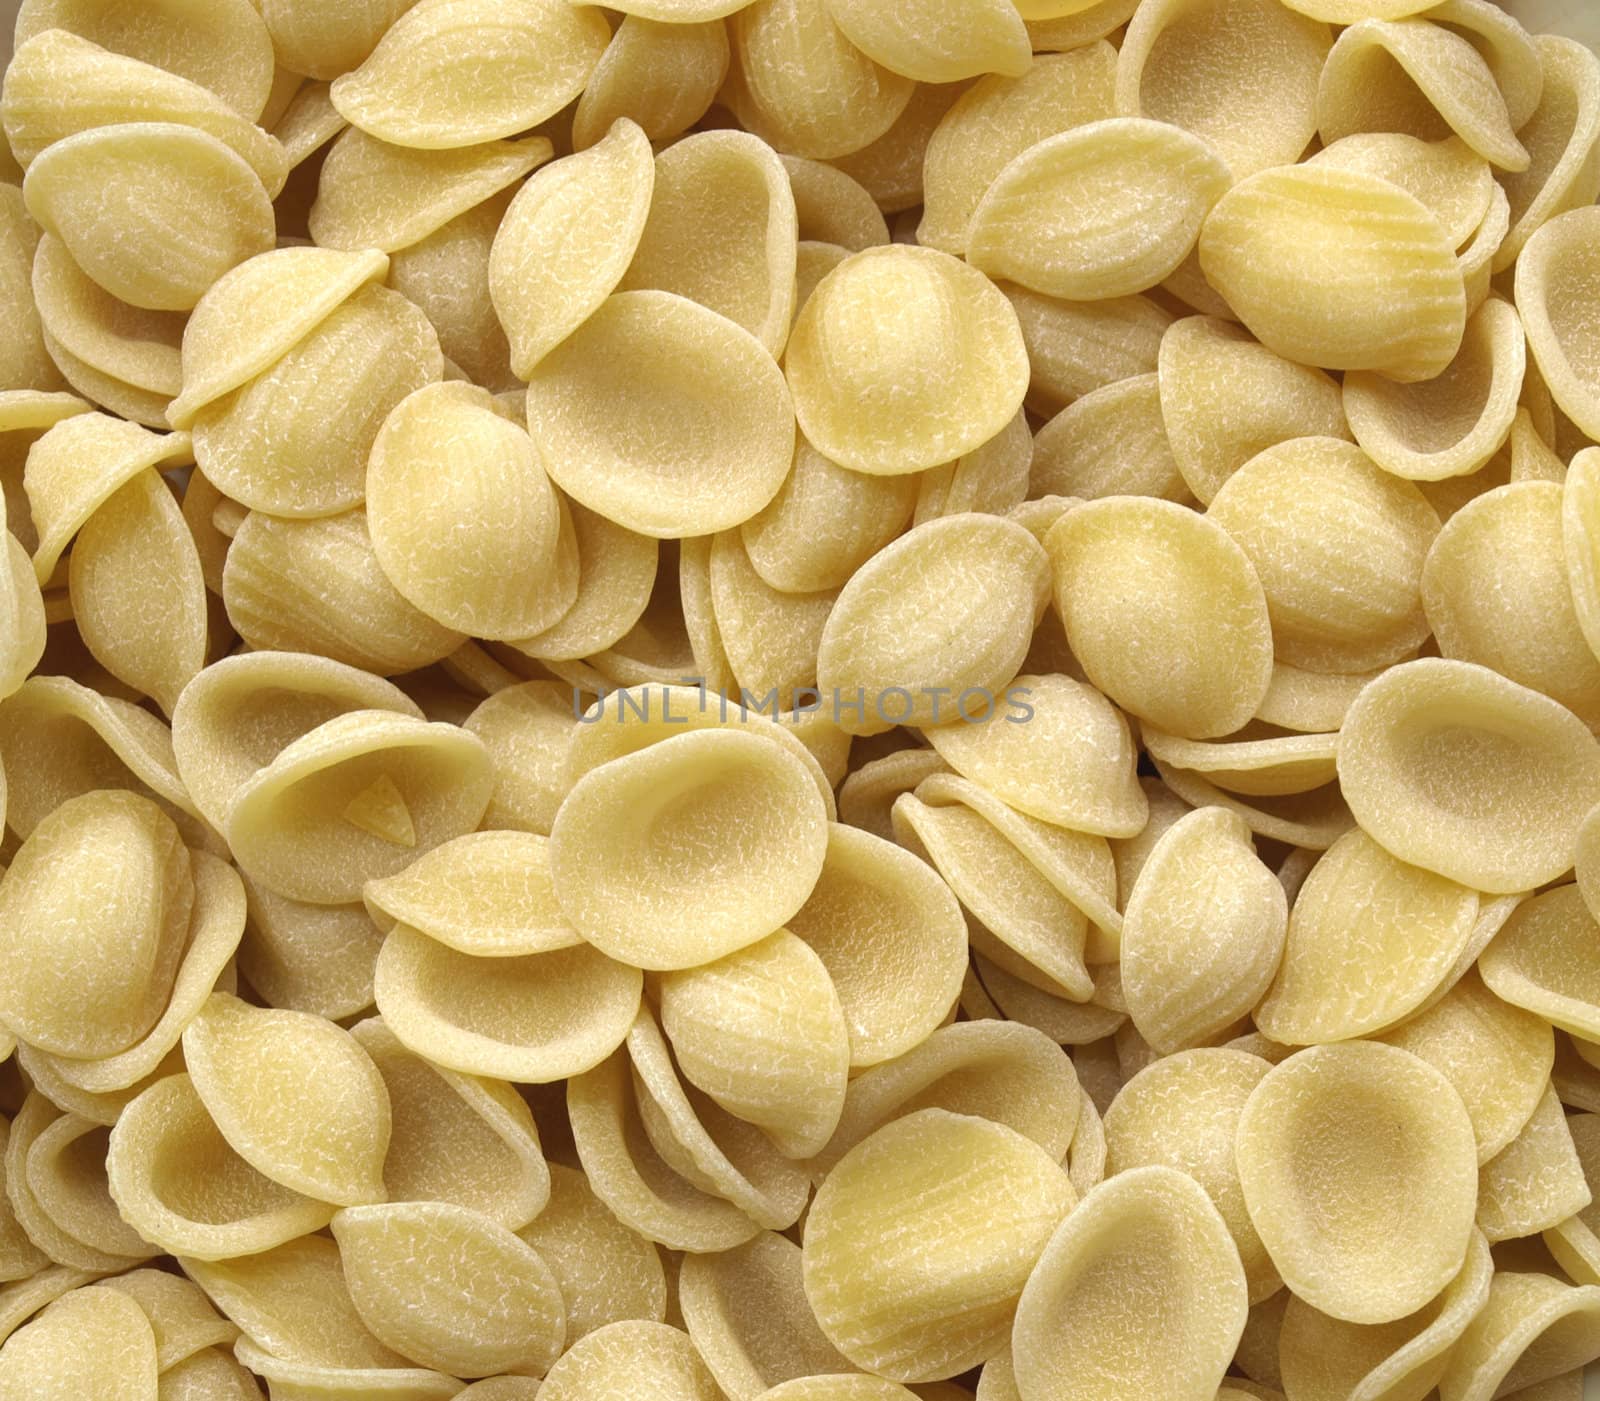 Orecchiette pasta from Apulia, Italy